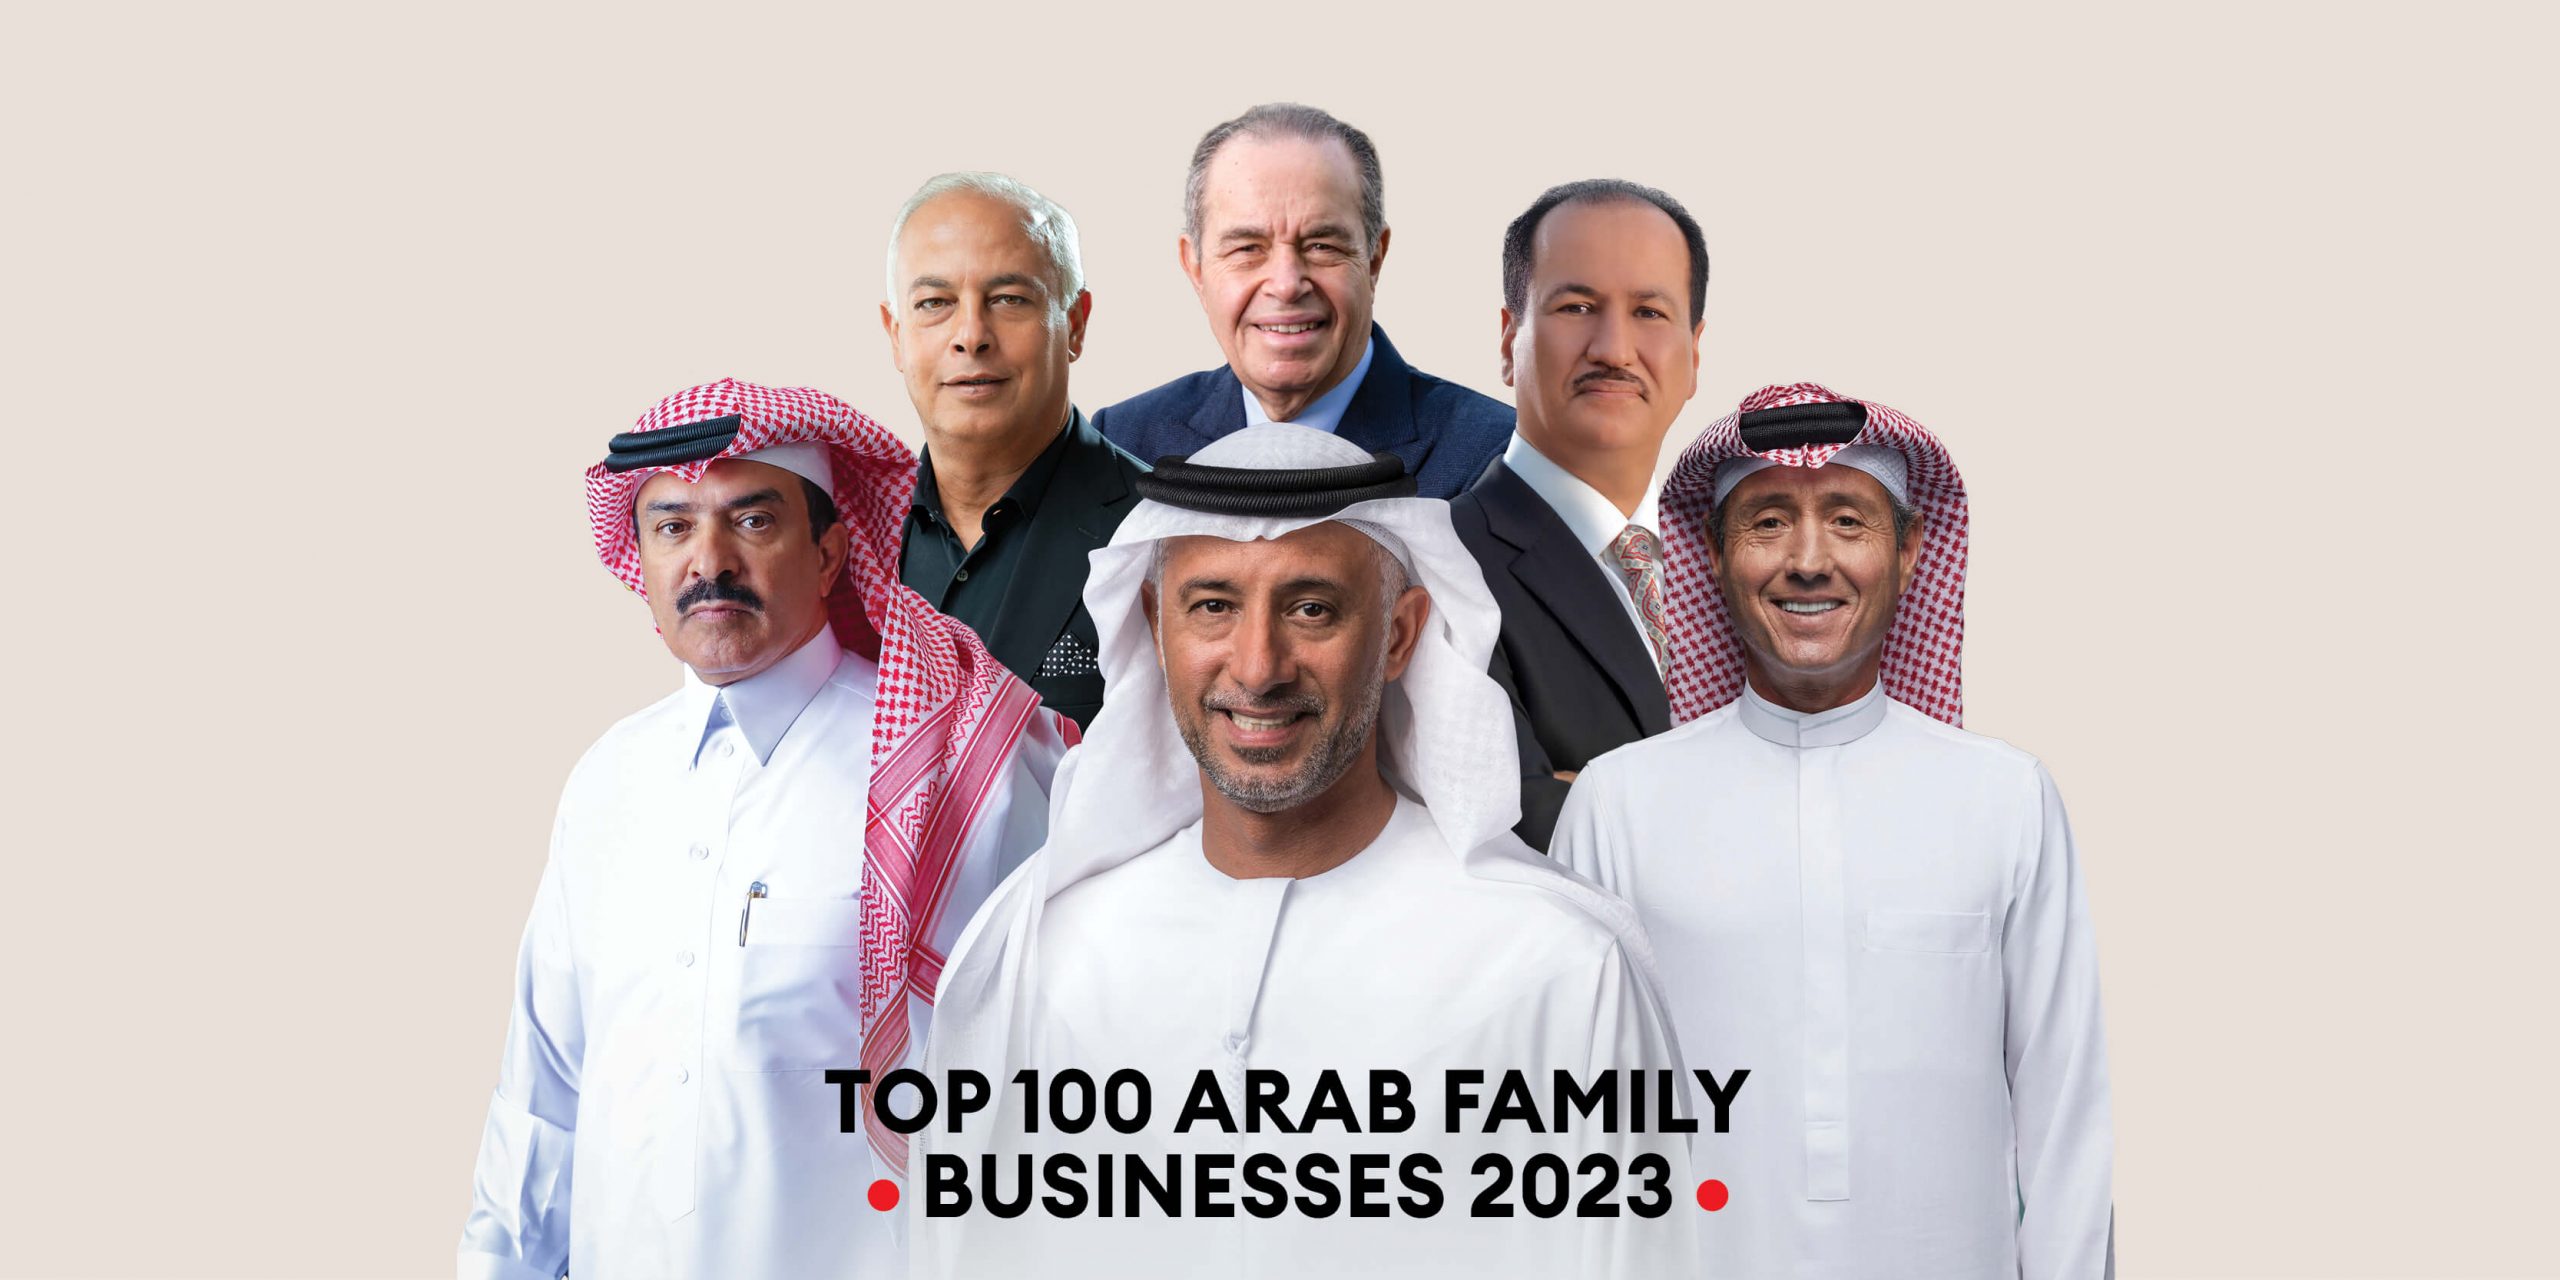 Top 100 Arab Family Businesses 2023